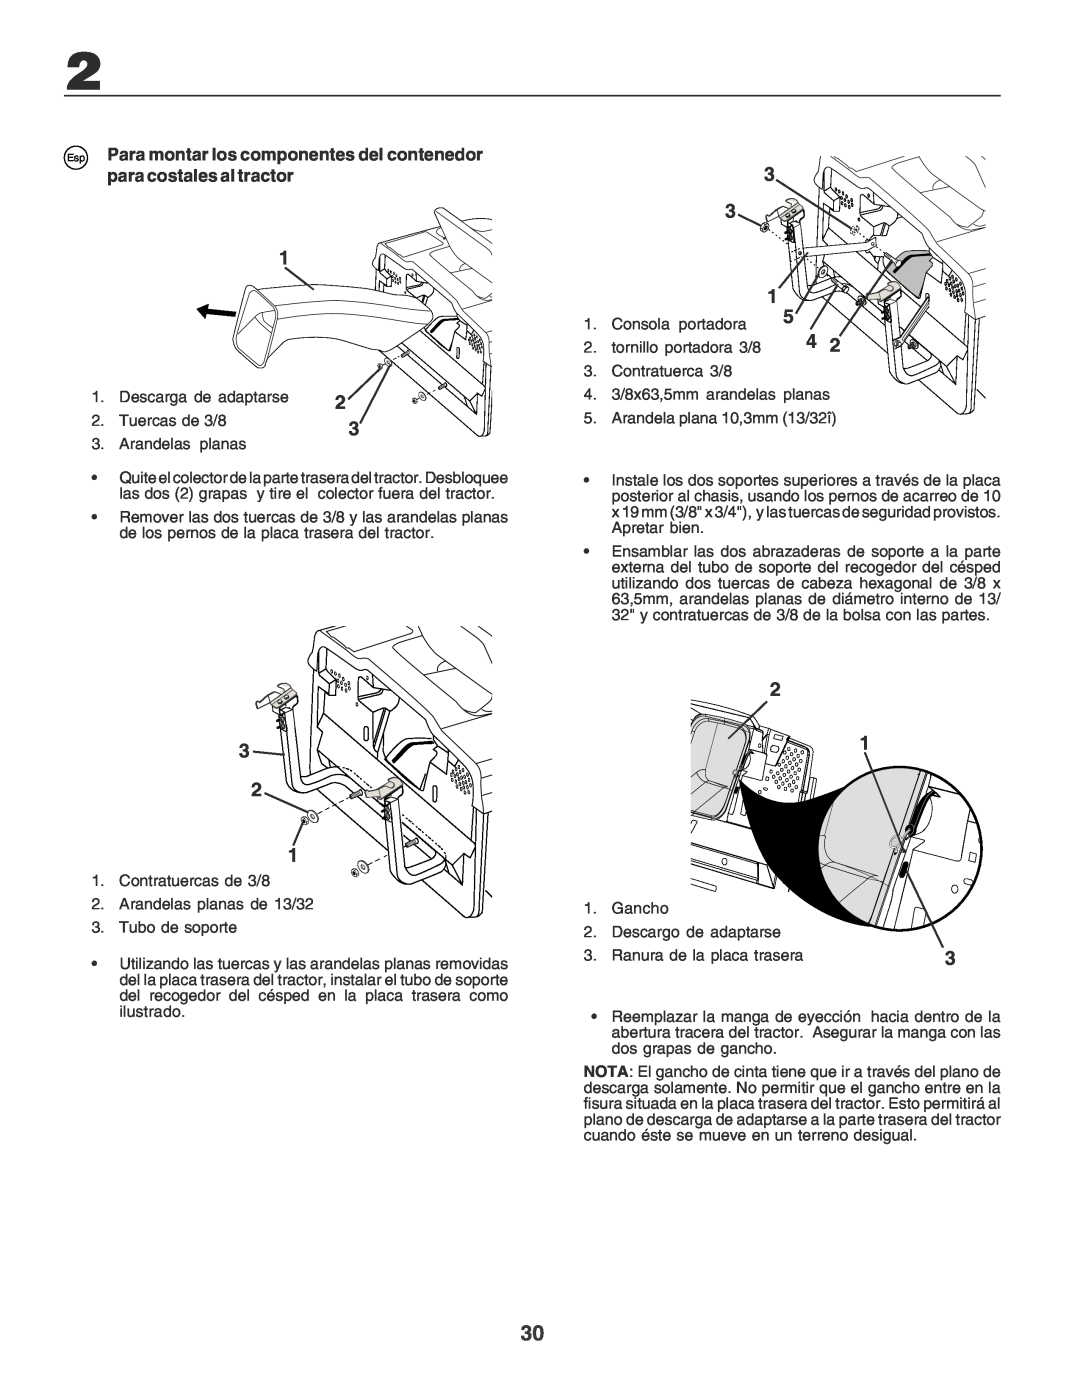 Husqvarna CTH170 instruction manual Descarga de adaptarse 